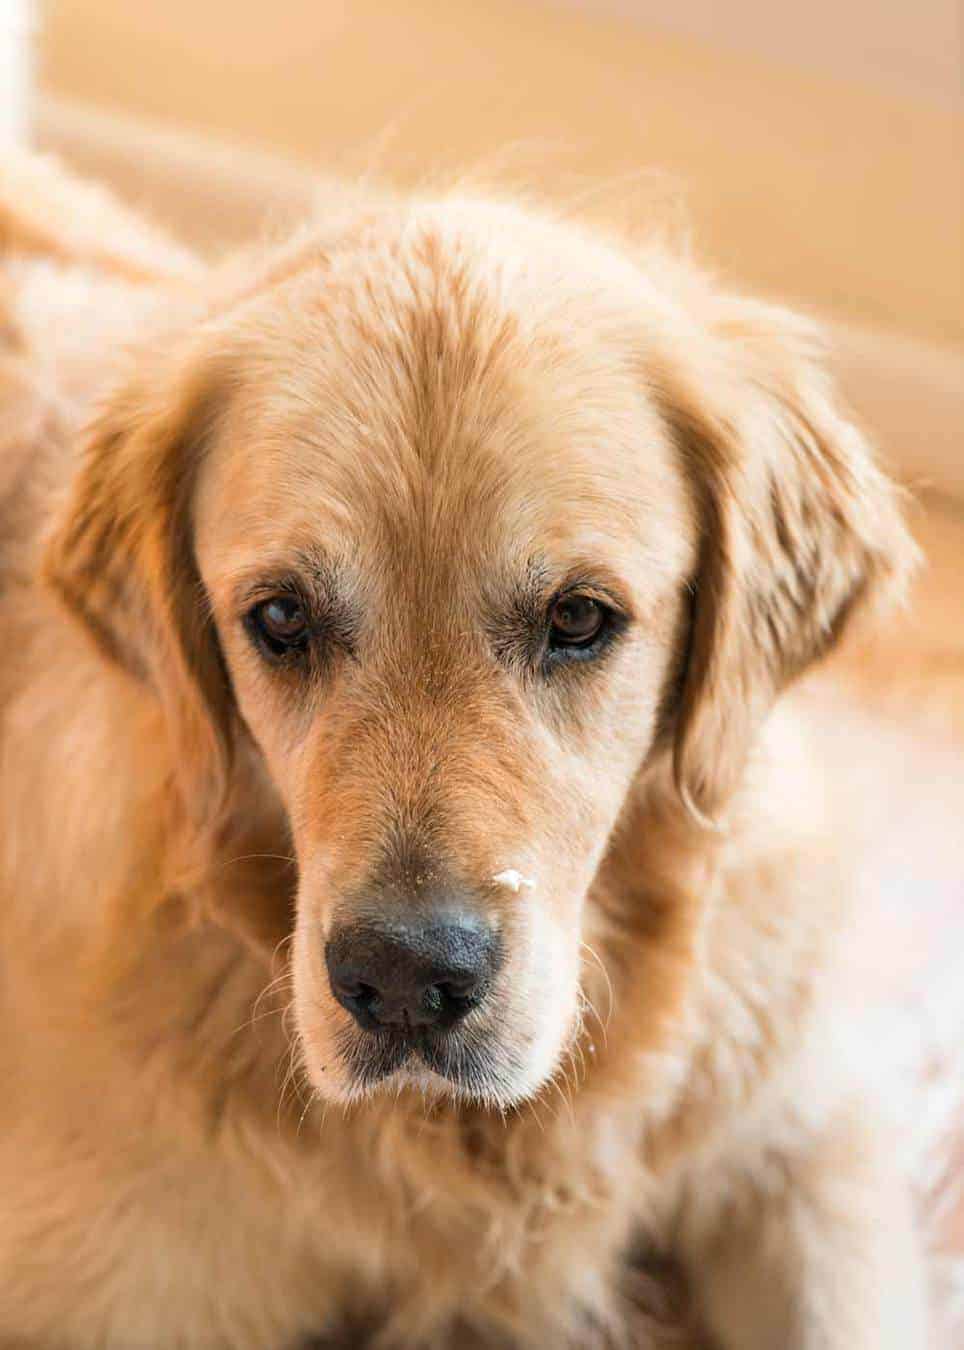 Dozer the golden retriever dog with cream or yogurt on his nose